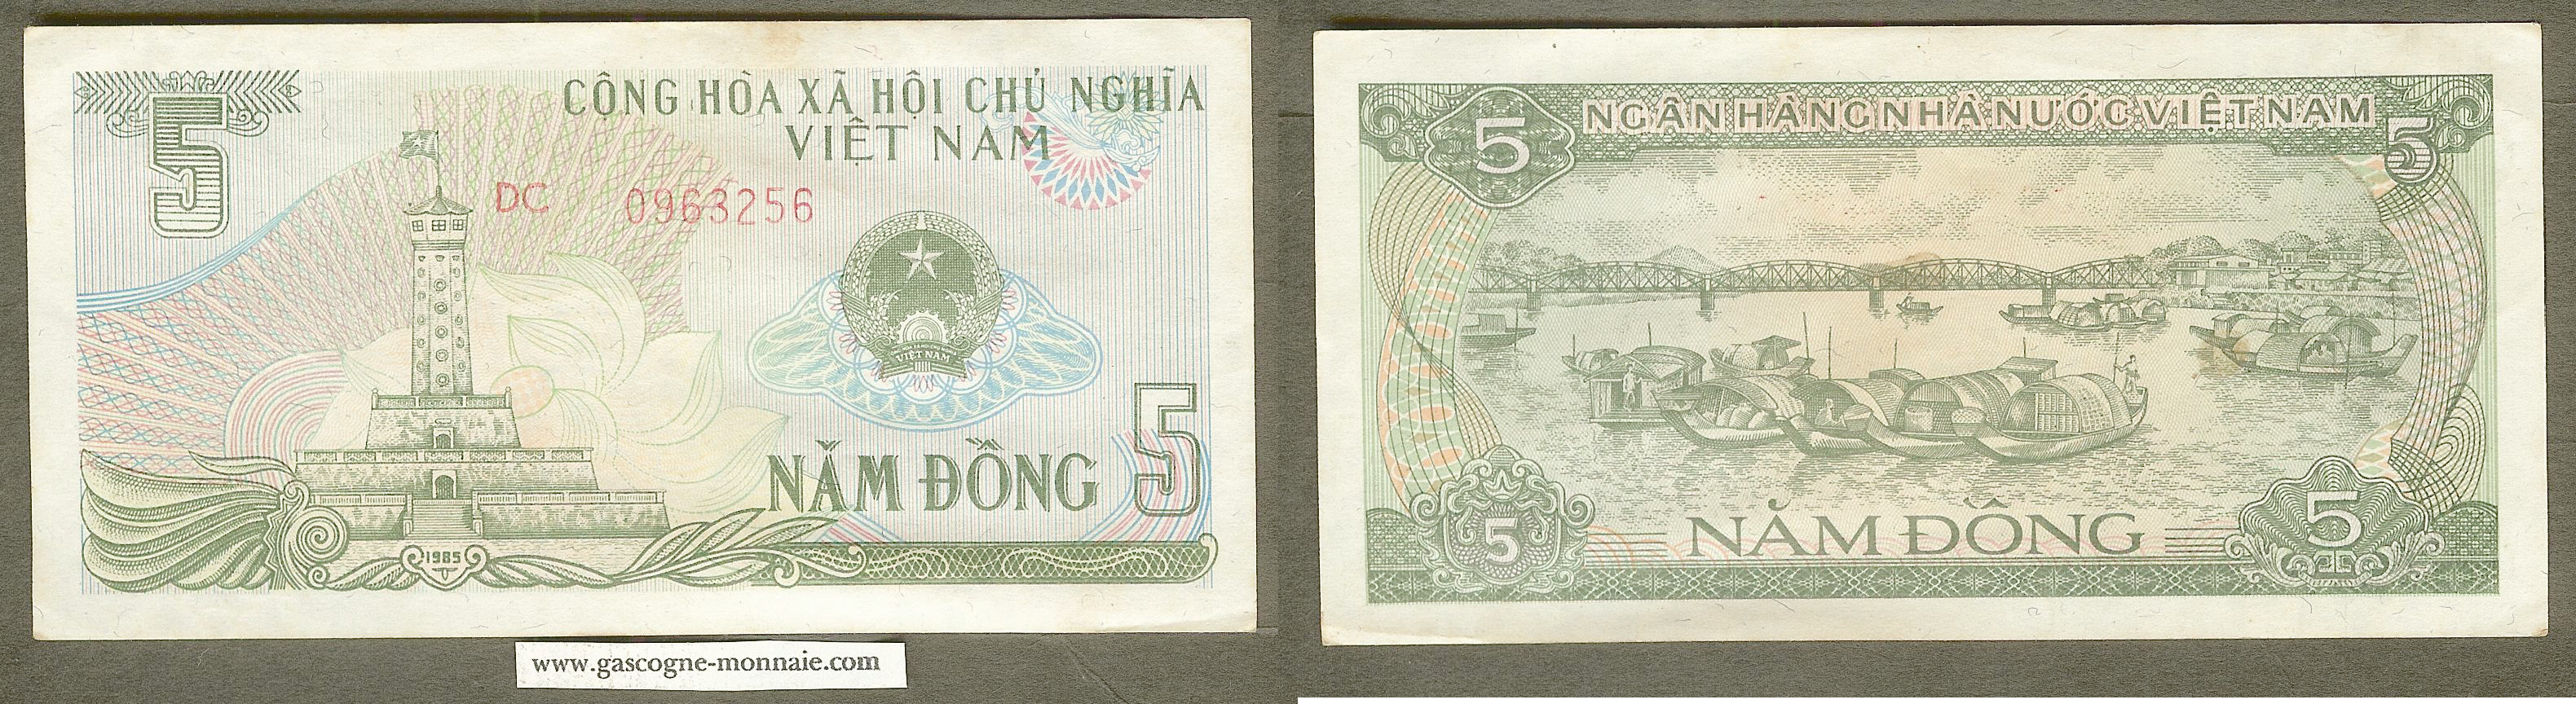 Vietnam 5 dong 1985 EF+